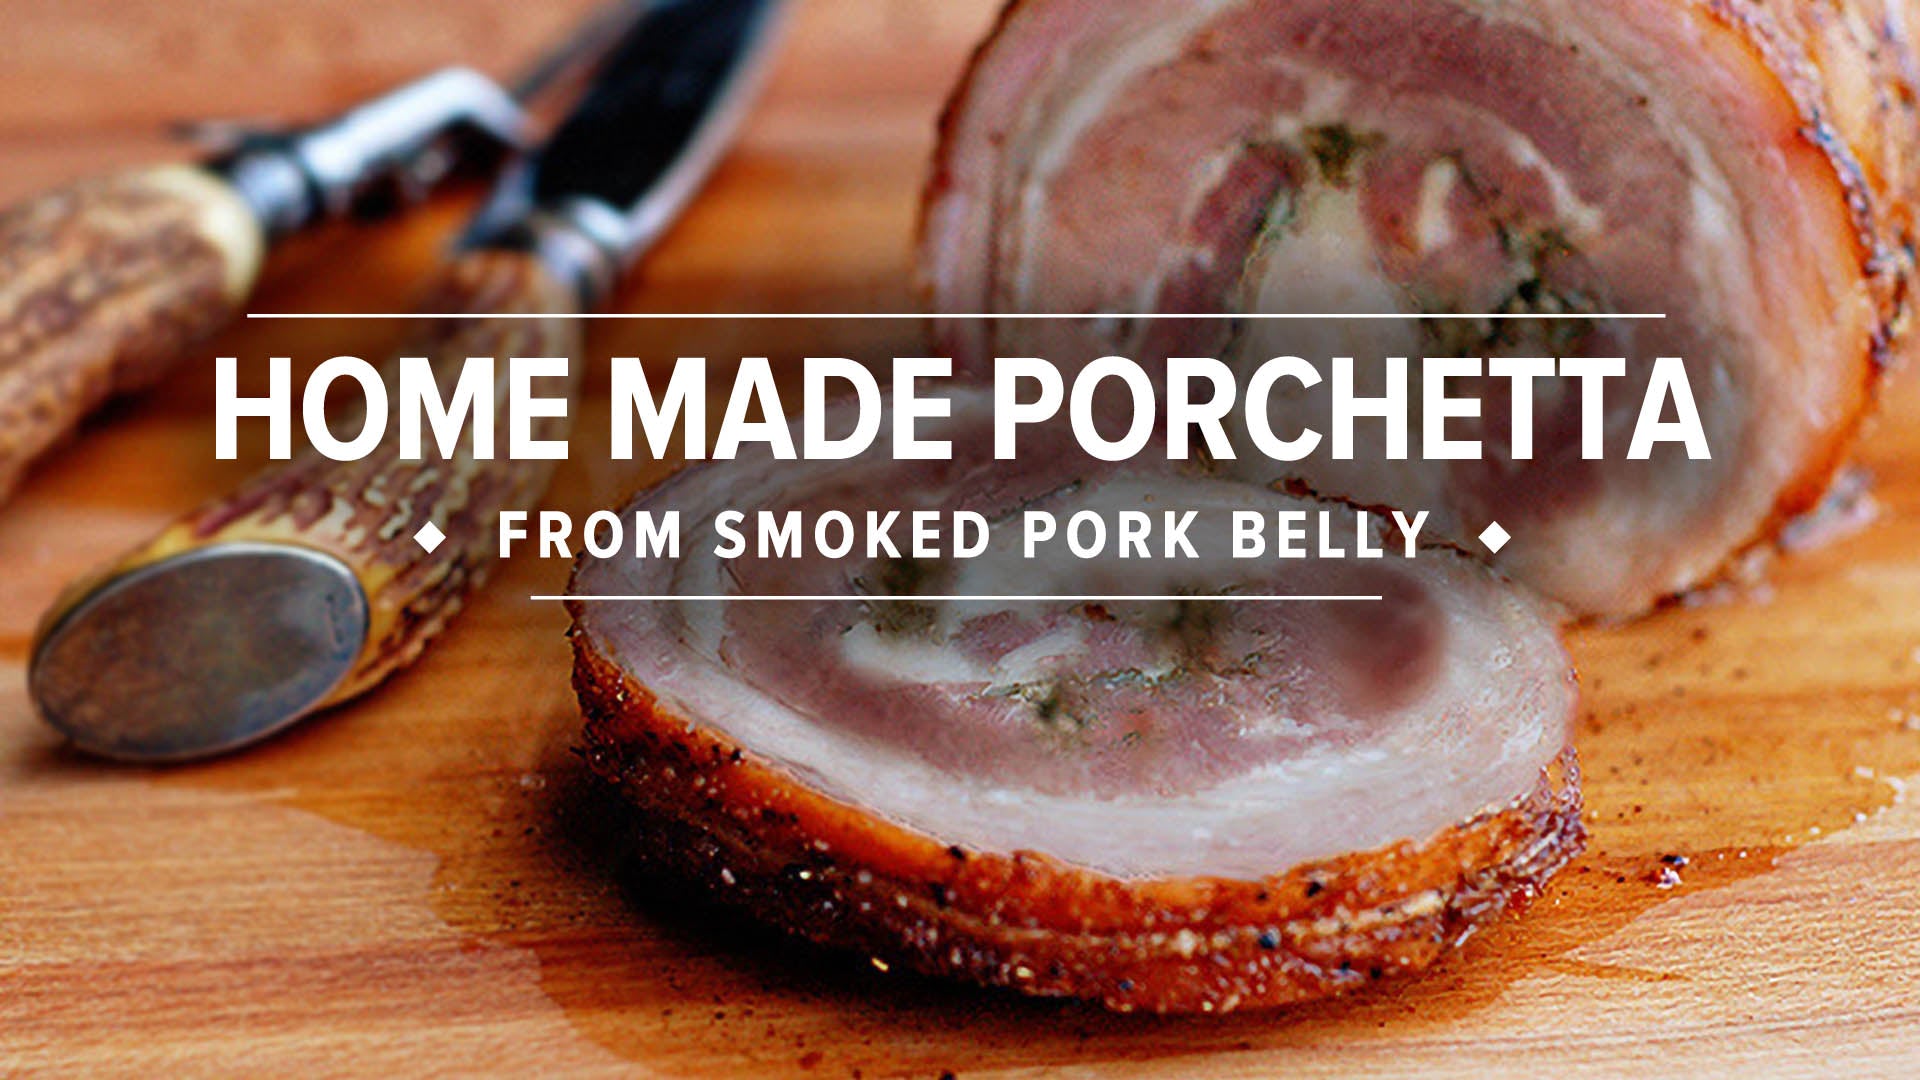 Homemade Porchetta from Pork Belly!